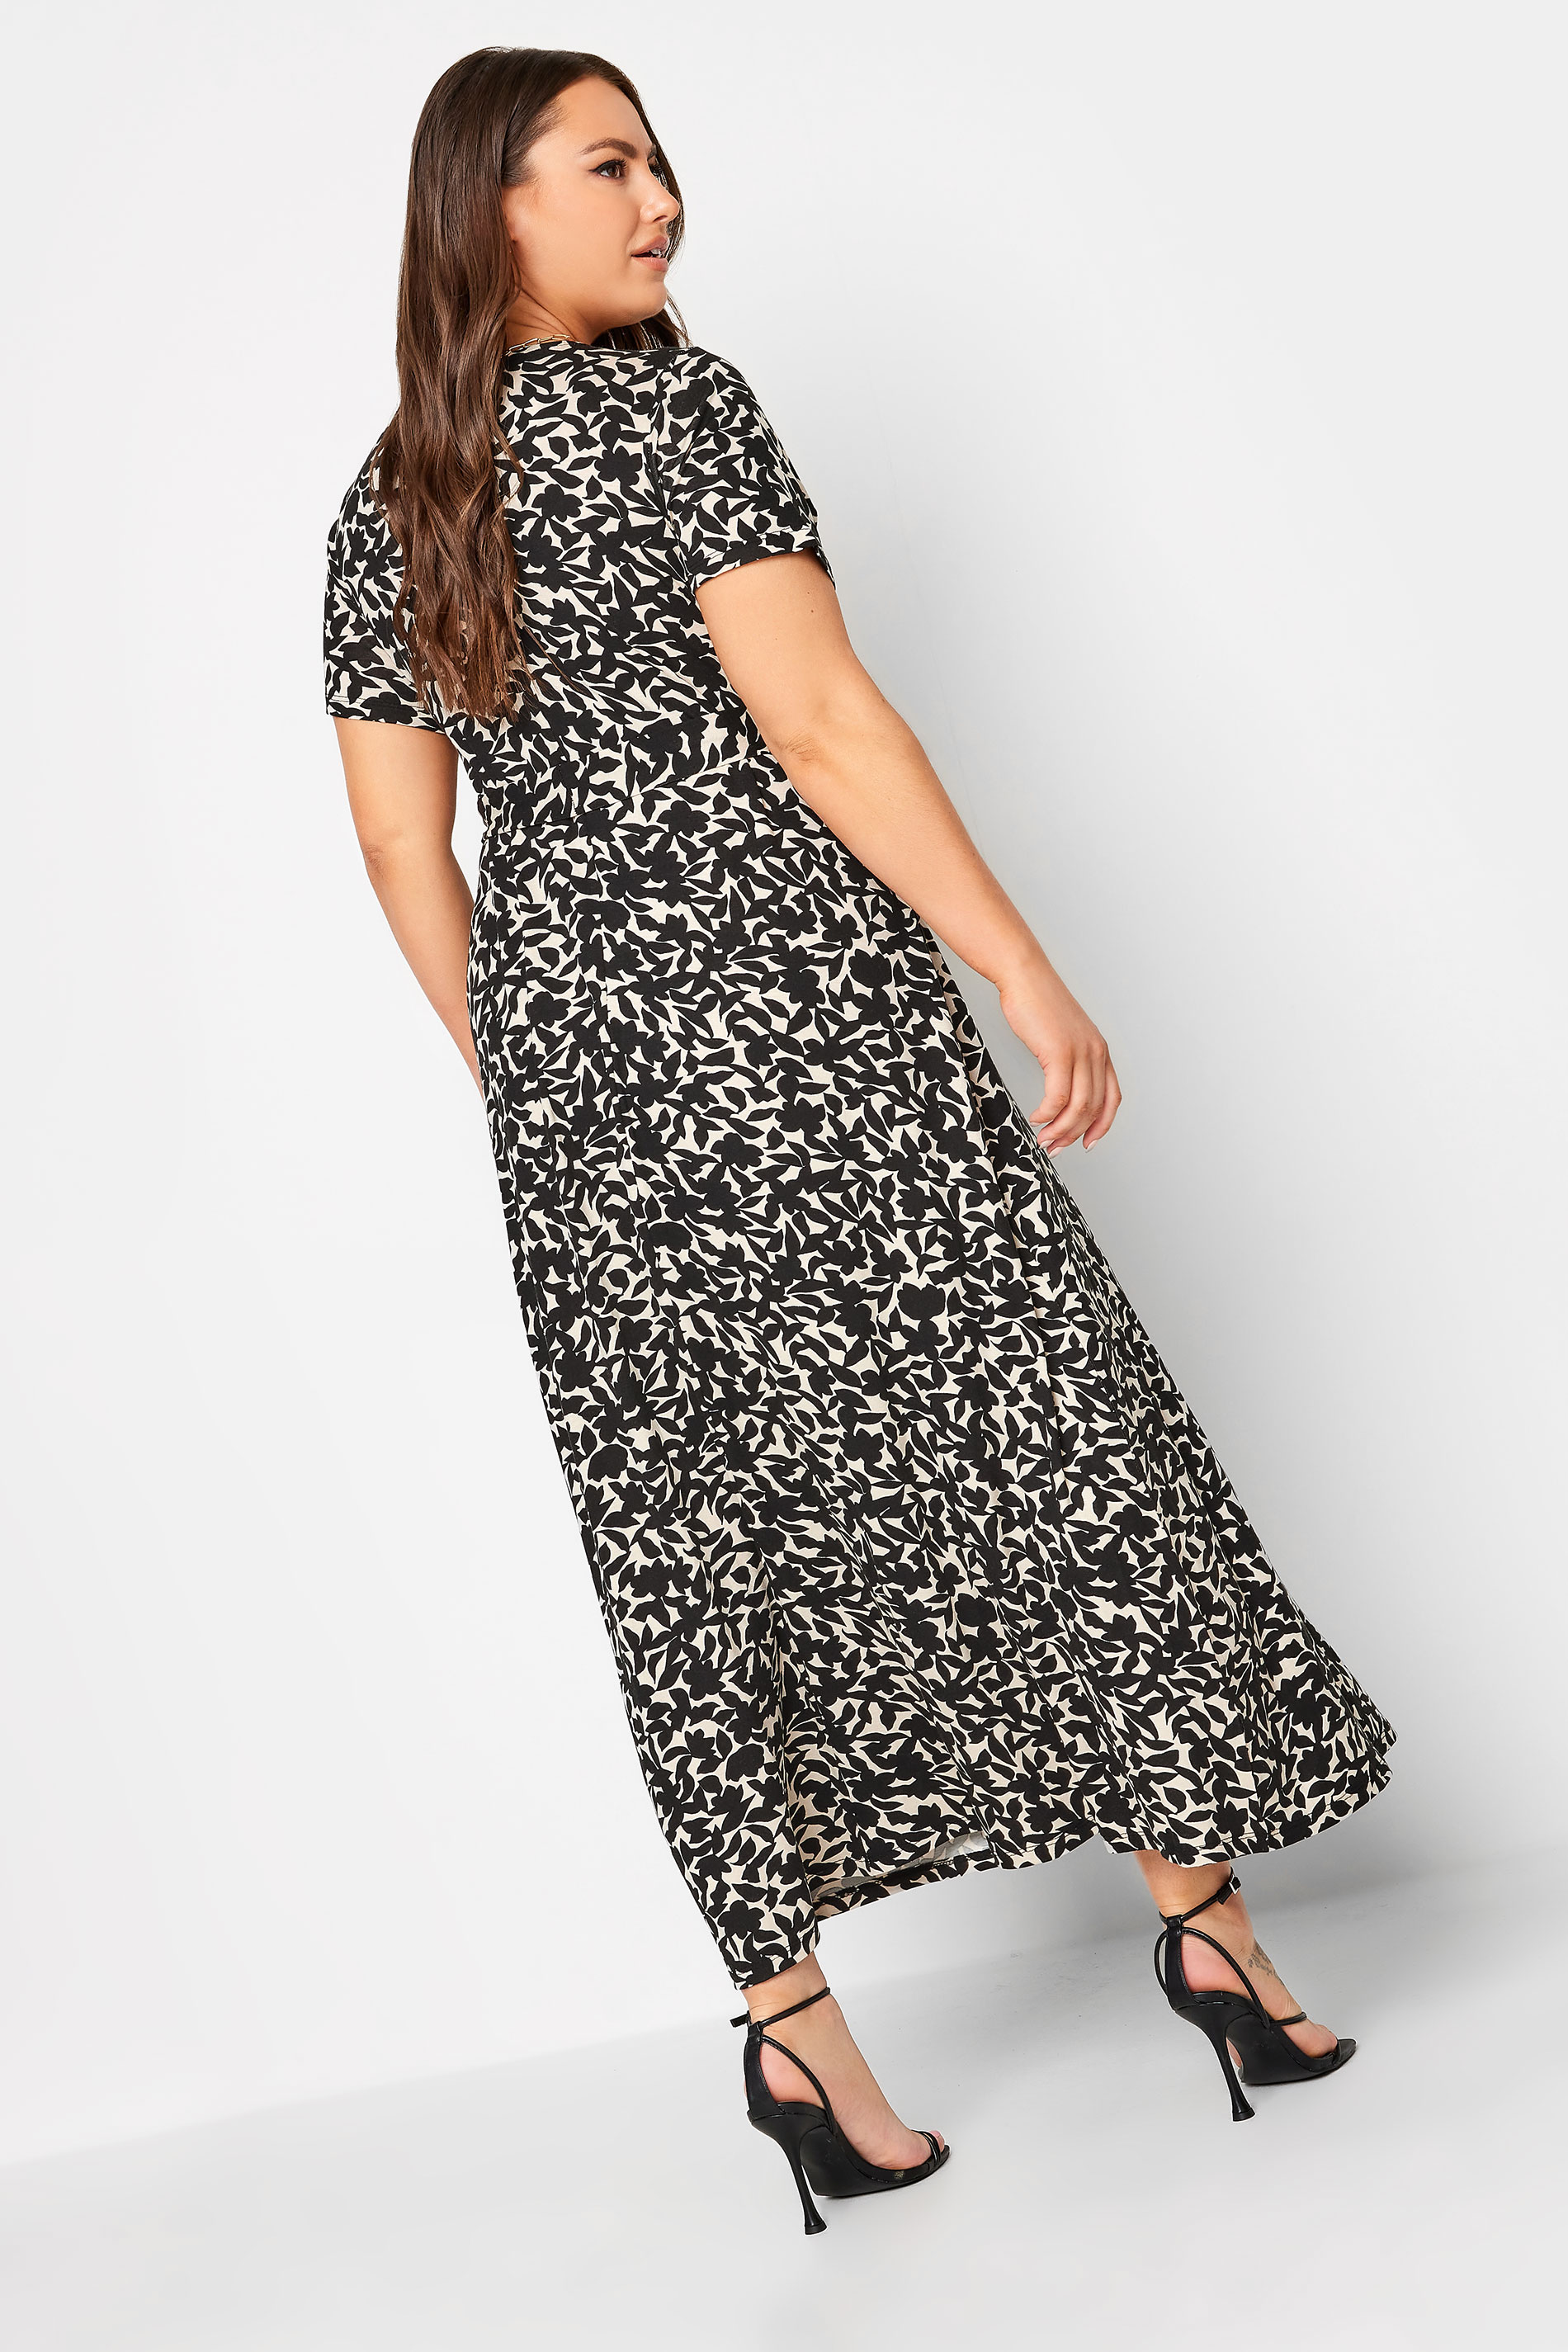 YOURS Plus Size Black Floral Print Wrap Maxi Dress | Yours Clothing 3